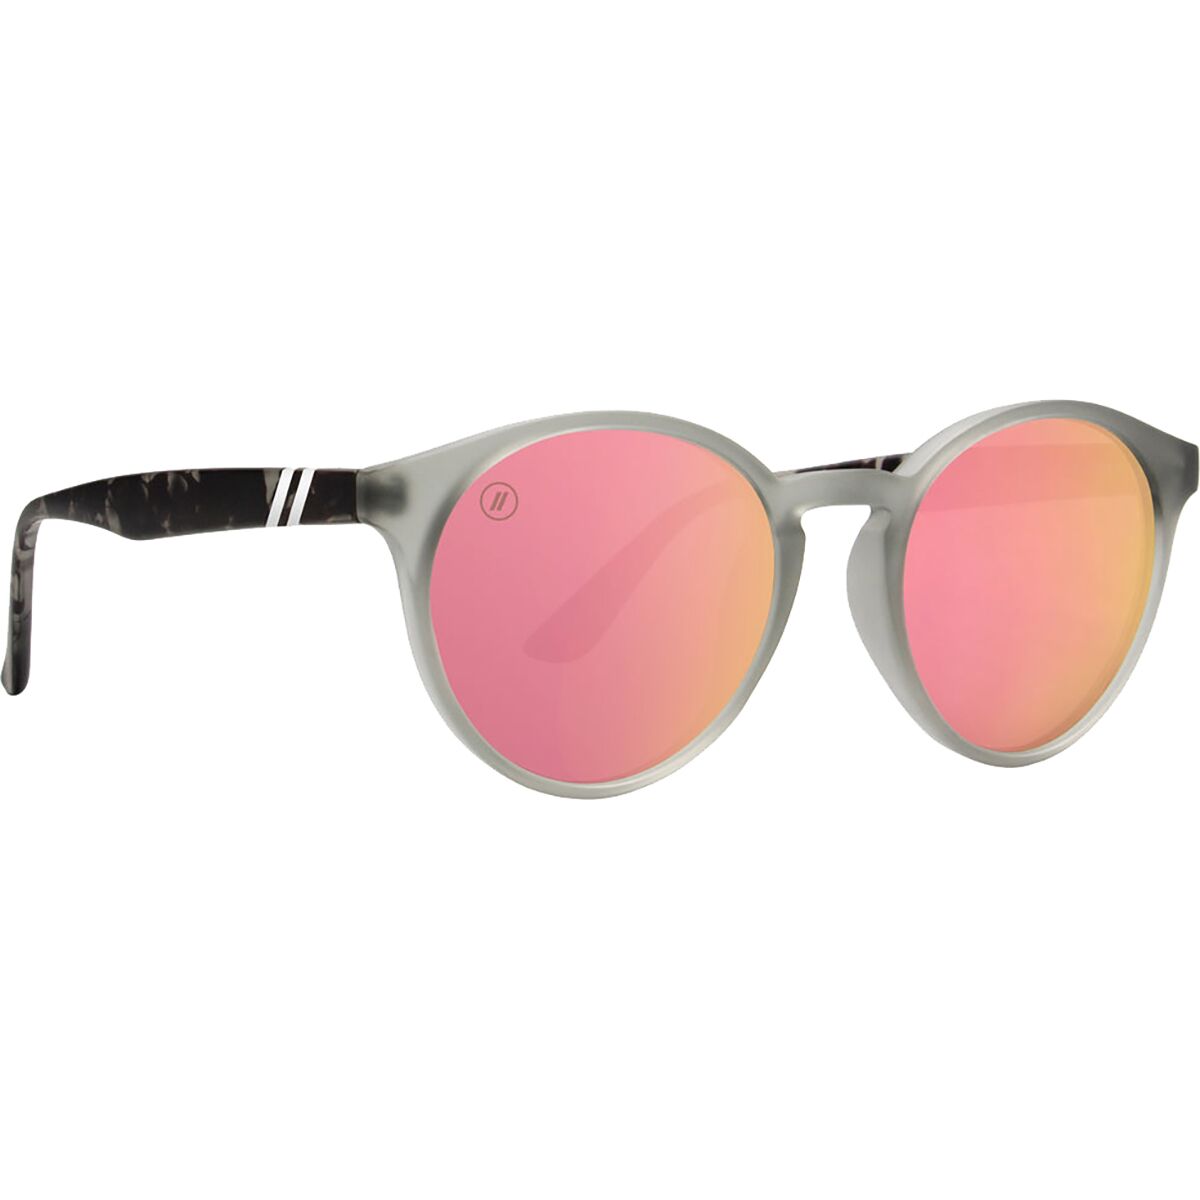 Blenders Eyewear Creative Romance Coastal Polarized Sunglasses - Women's